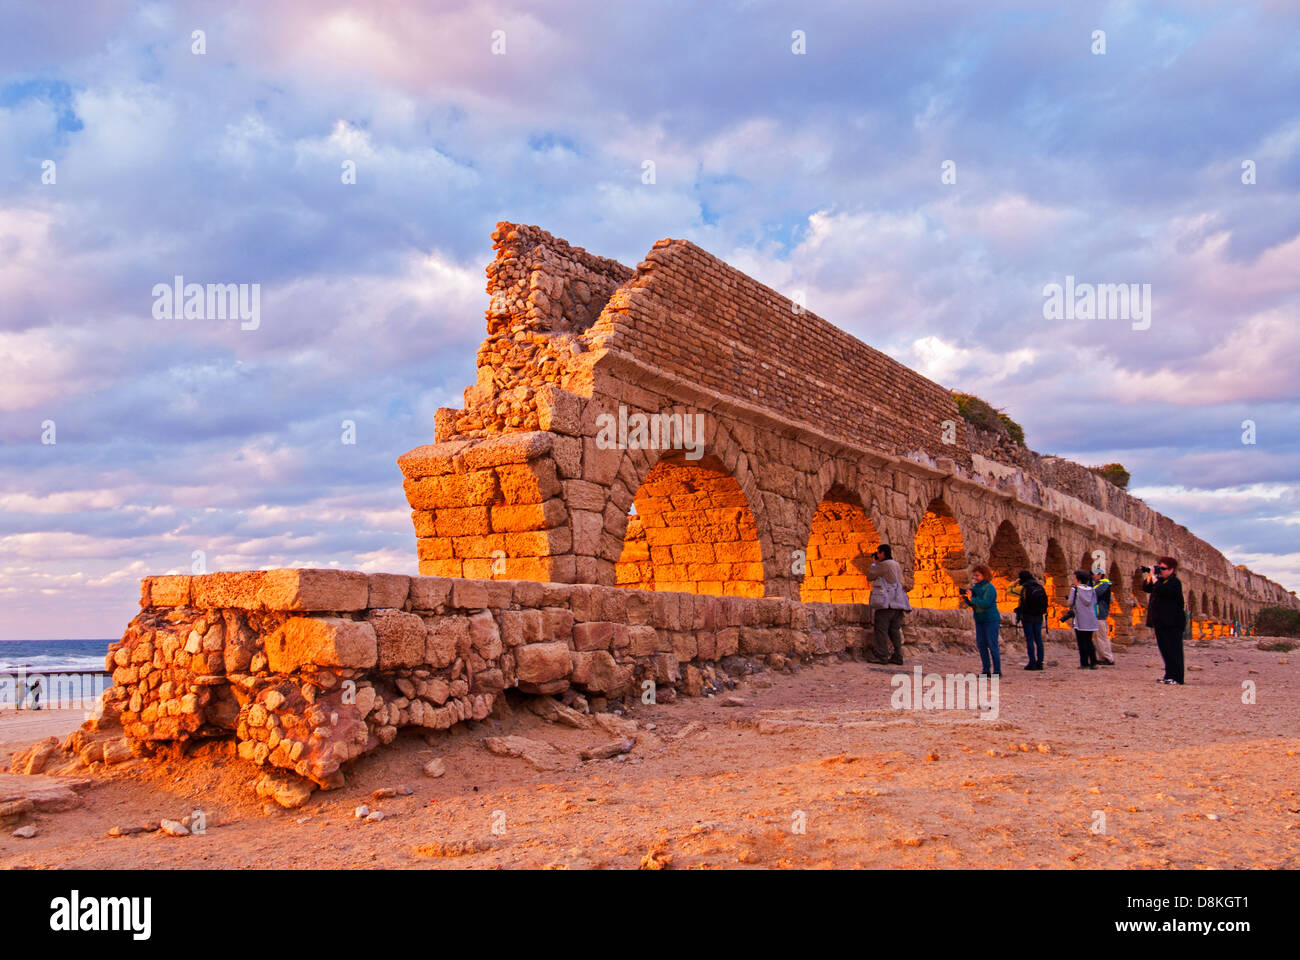 Remains of ancient Roman aqueduct, judean desert, israel Stock Photo